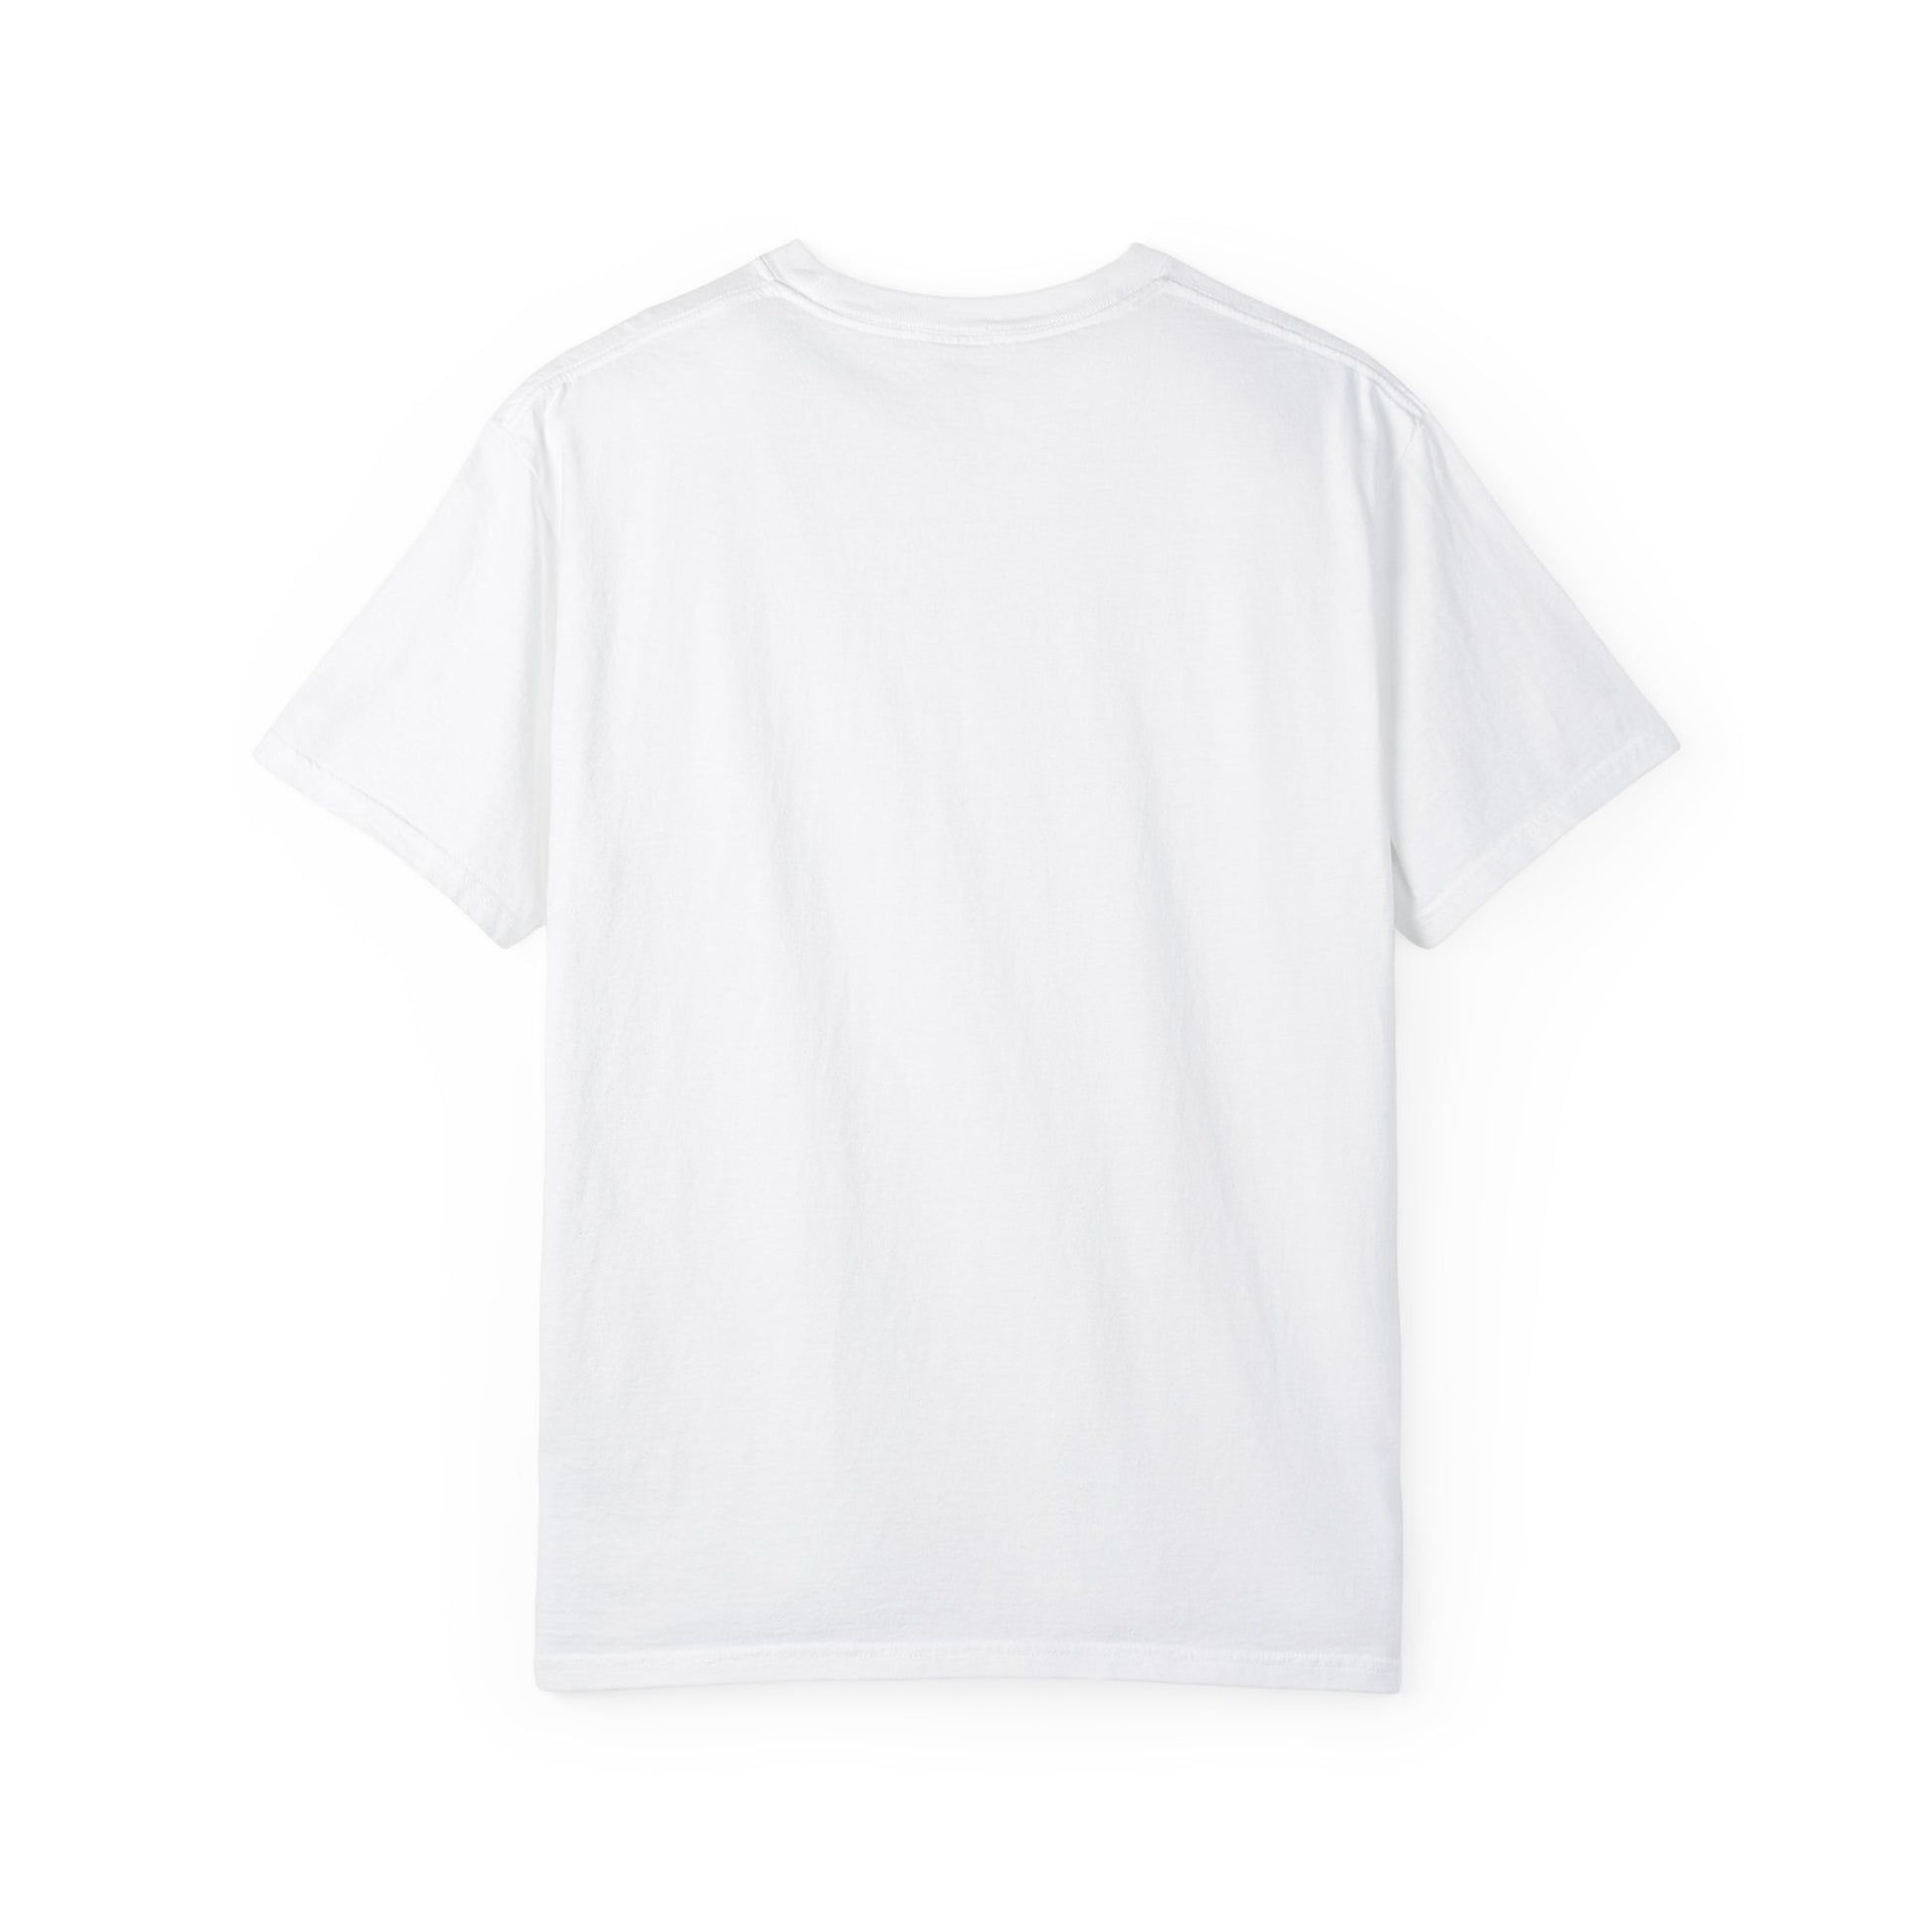 Hip Hop Teddy Bear Graphic Unisex Garment-dyed T-shirt Cotton Funny Humorous Graphic Soft Premium Unisex Men Women White T-shirt Birthday Gift-16